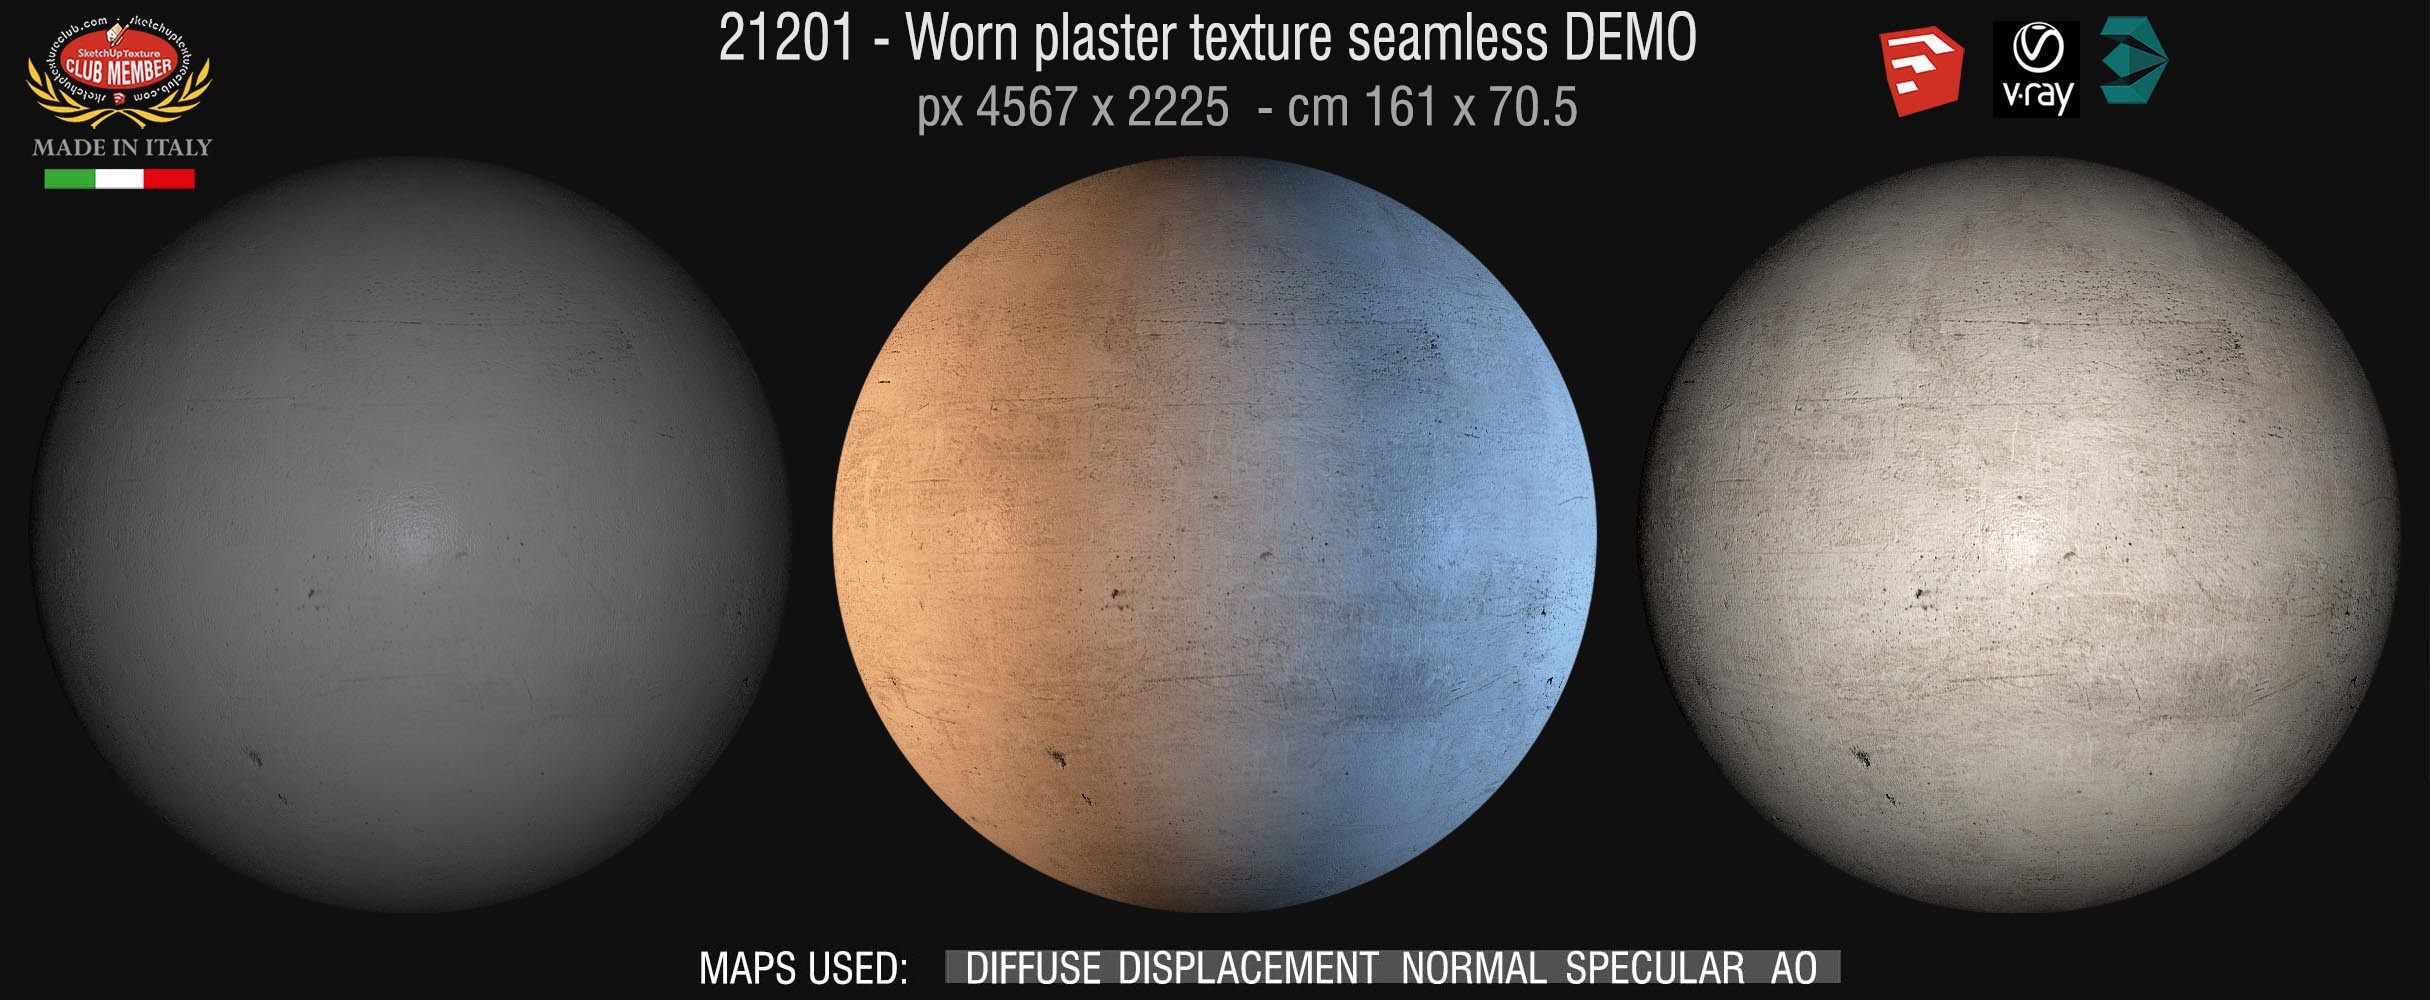 21201 Worn plaster texture seamless + maps DEMO